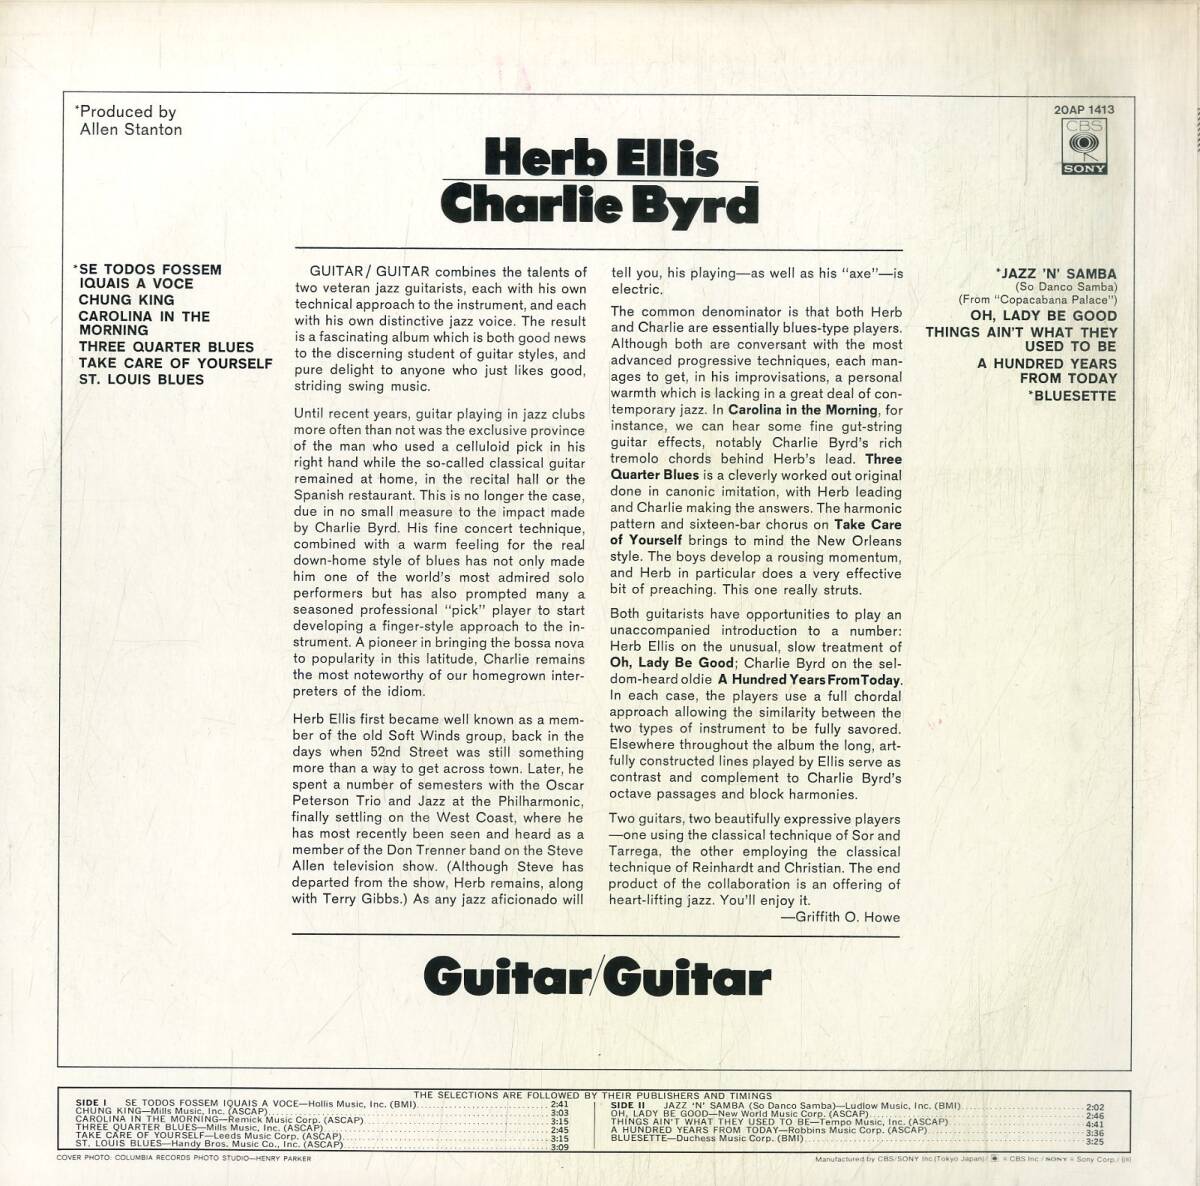 A00590572/LP/ハーブ・エリス / チャーリー・バード「Guitar / Guitar (1979年・20AP-1413・ボサノヴァ・BOSSA NOVA・コンテンポラリーJAの画像2